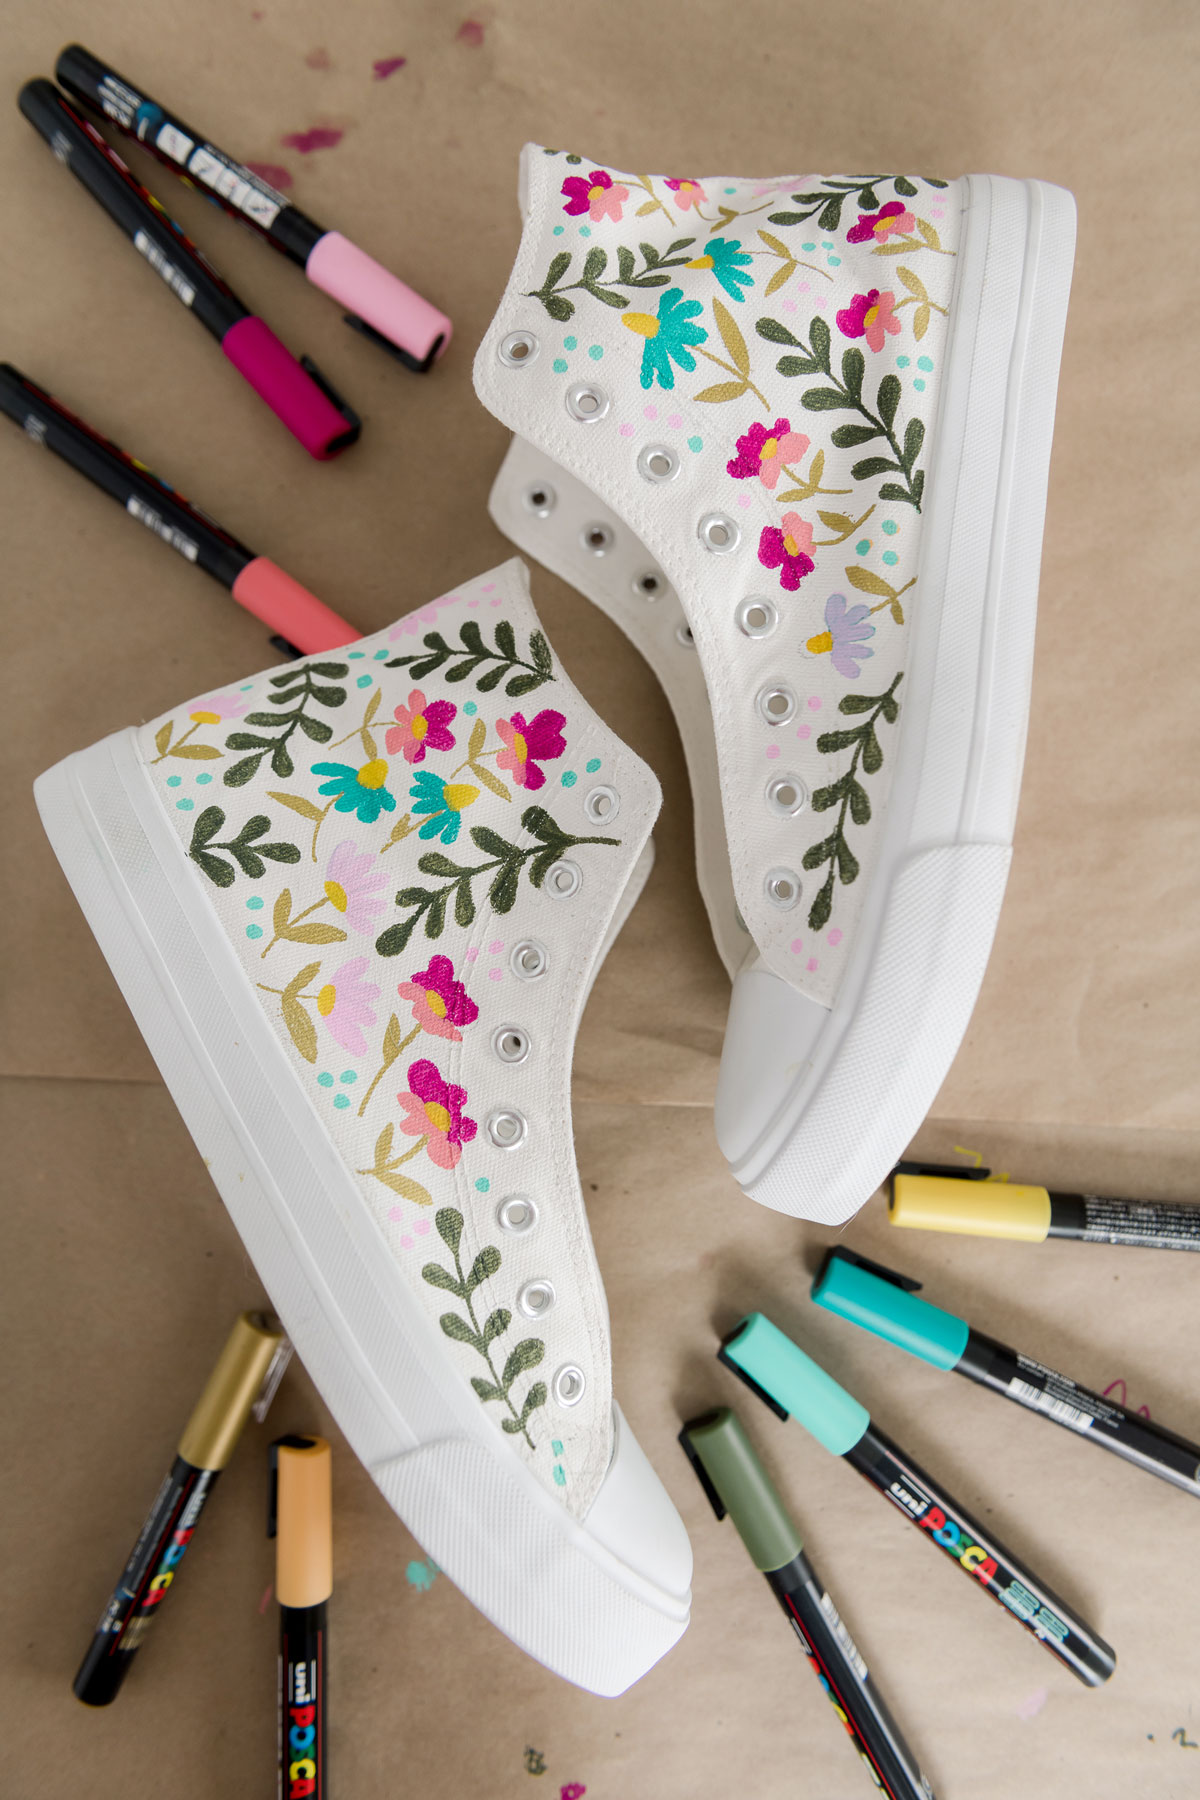 Floral painted converse shoes!